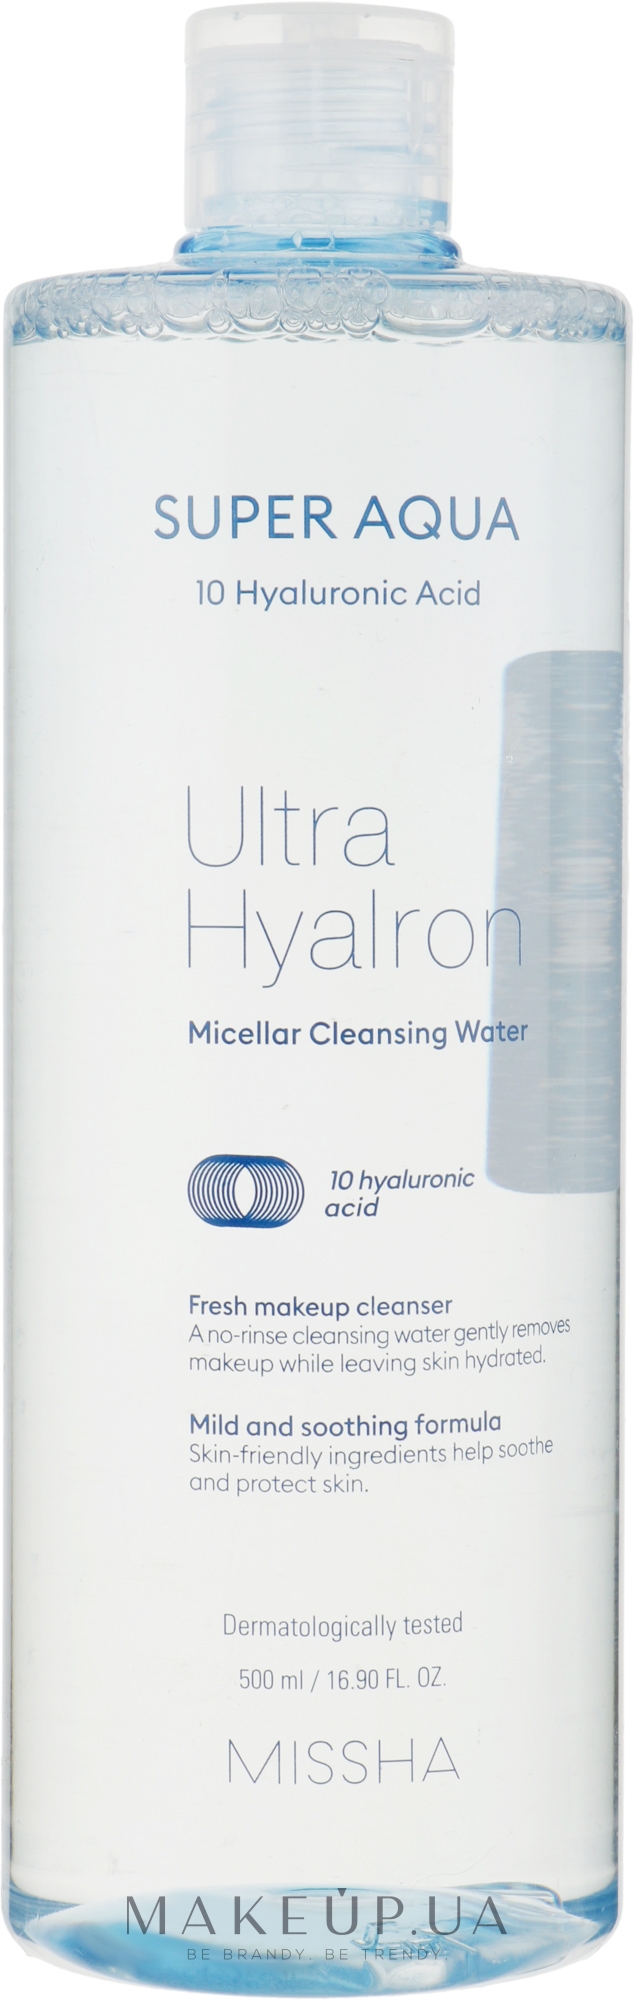 Увлажняющая мицеллярная вода - Missha Super Aqua Ultra Hyalon Micellar Cleansing Water — фото 500ml